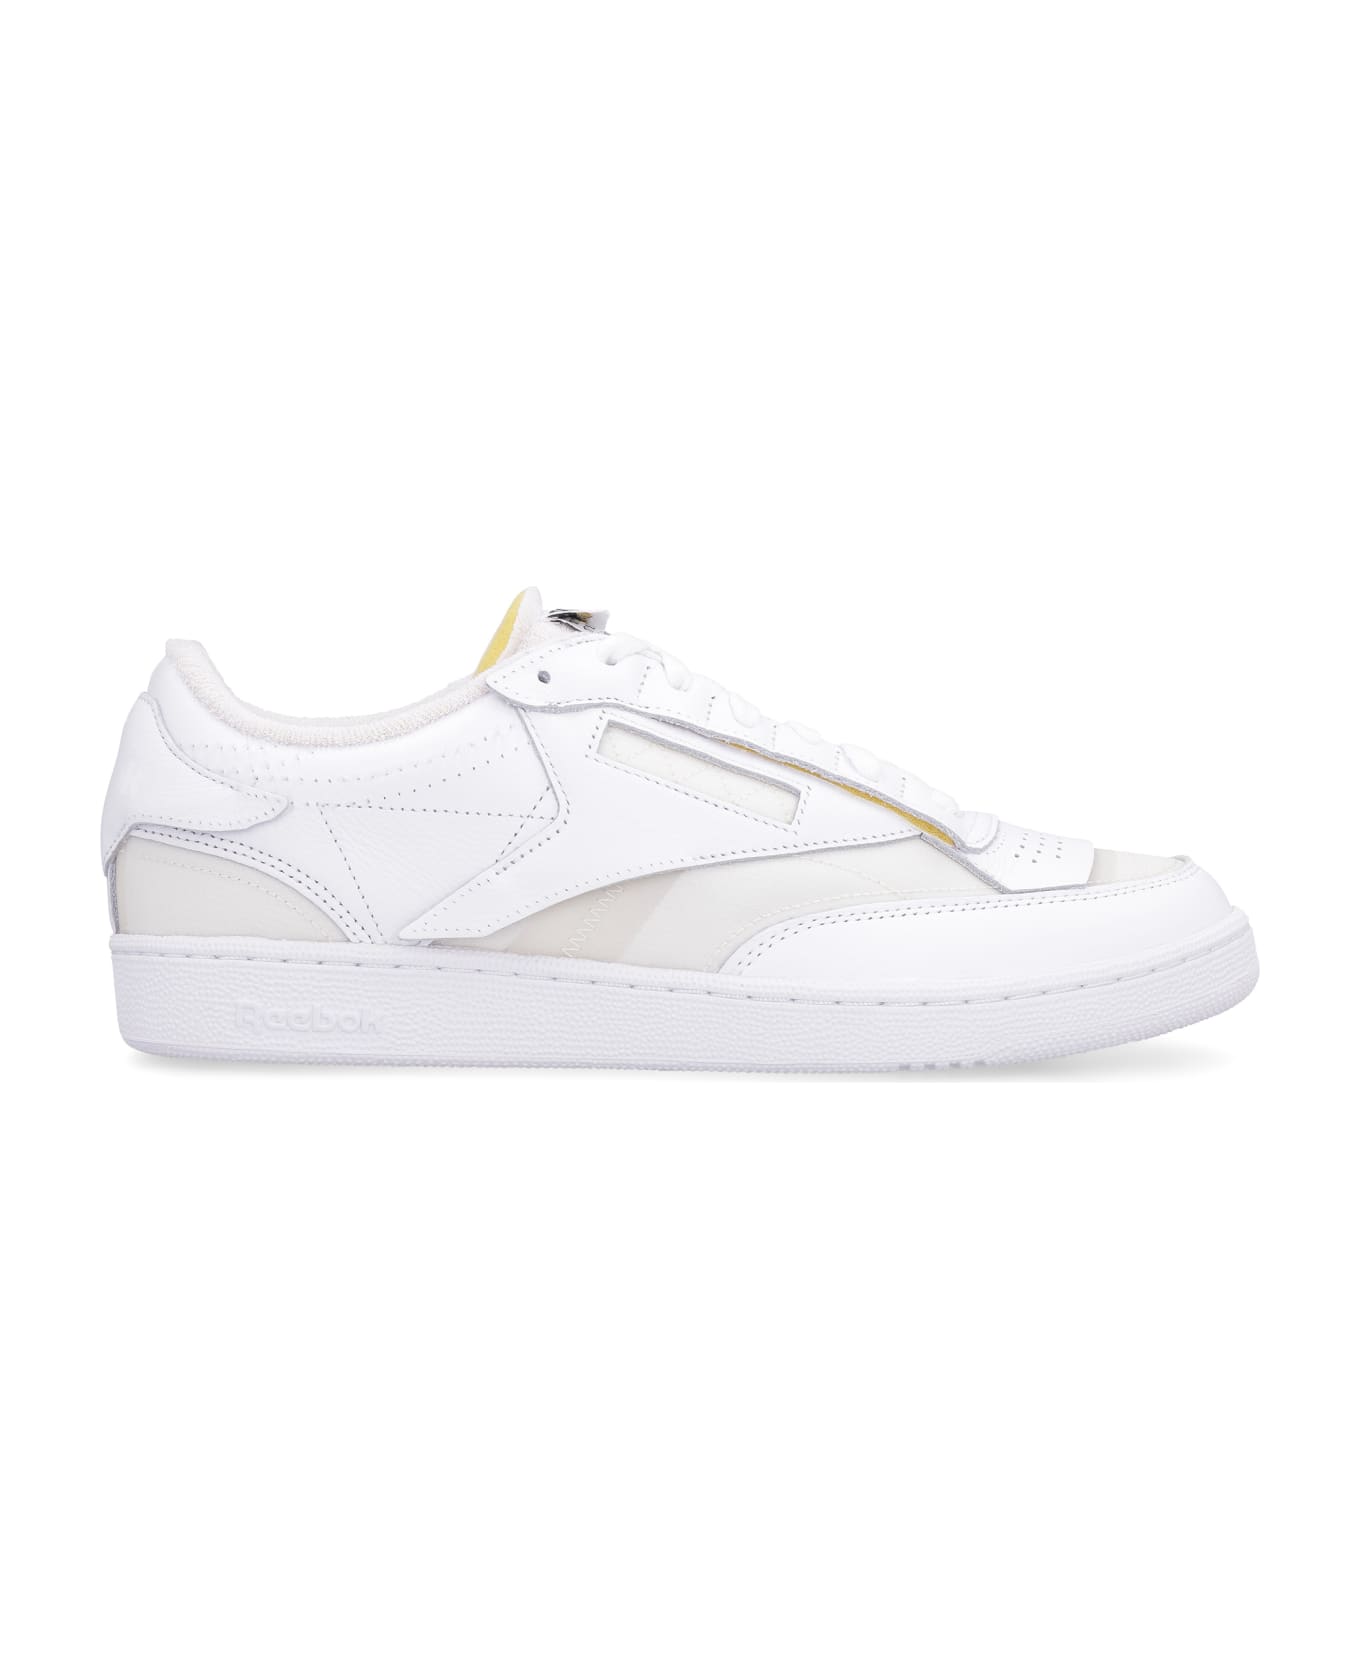 Maison Margiela Mm X Reebok - Leather Low-top Sneakers - White